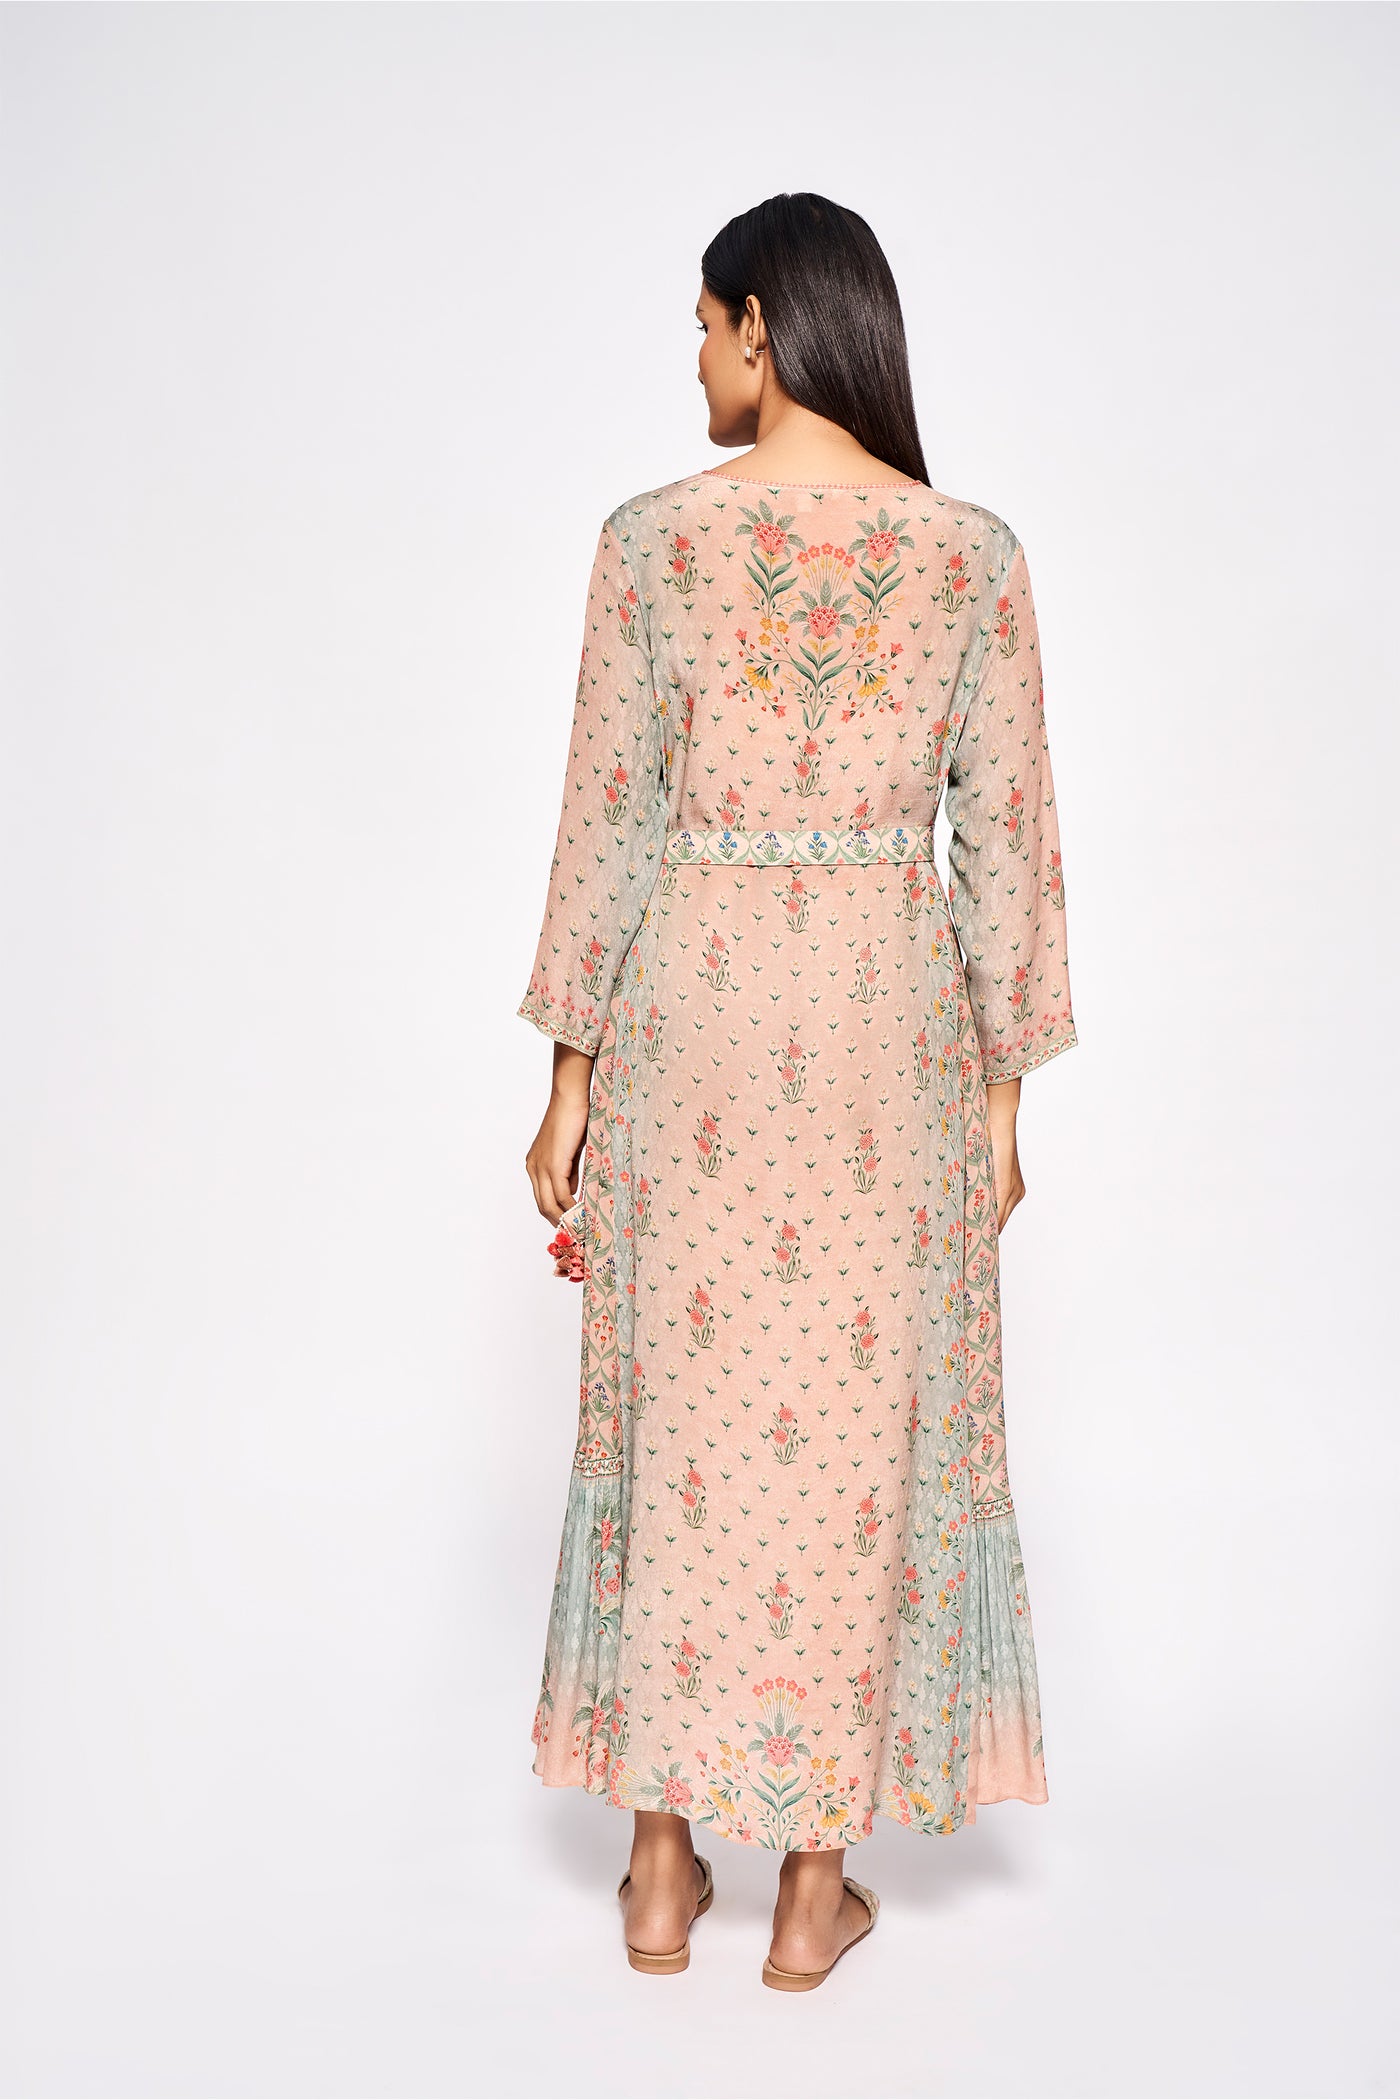 Anita Dongre Devina Dress Pink western indian designer wear online shopping melange singapore